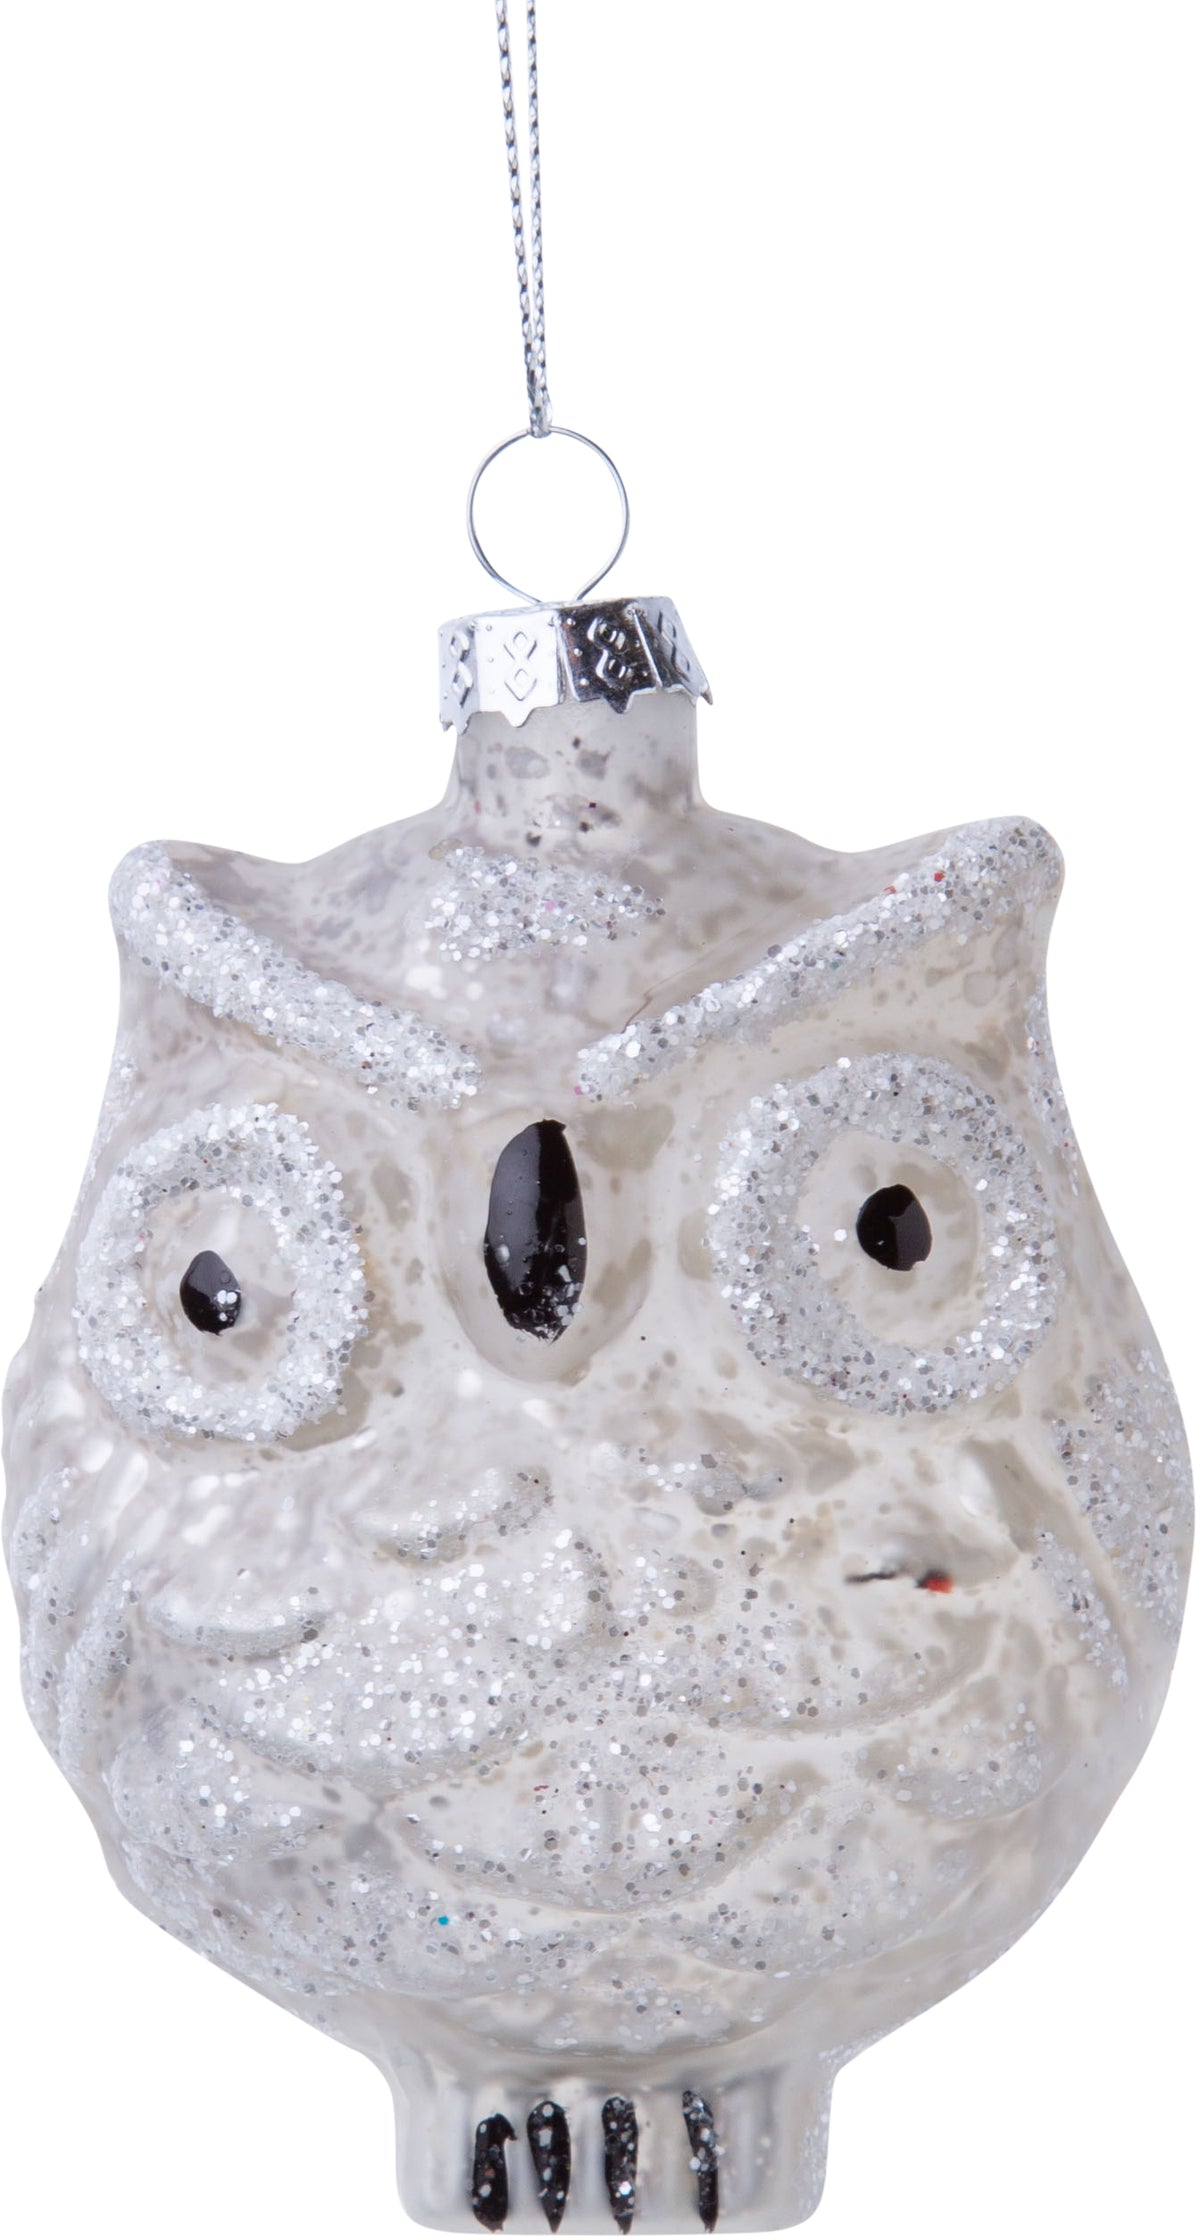 Round Glass Owl Ornament